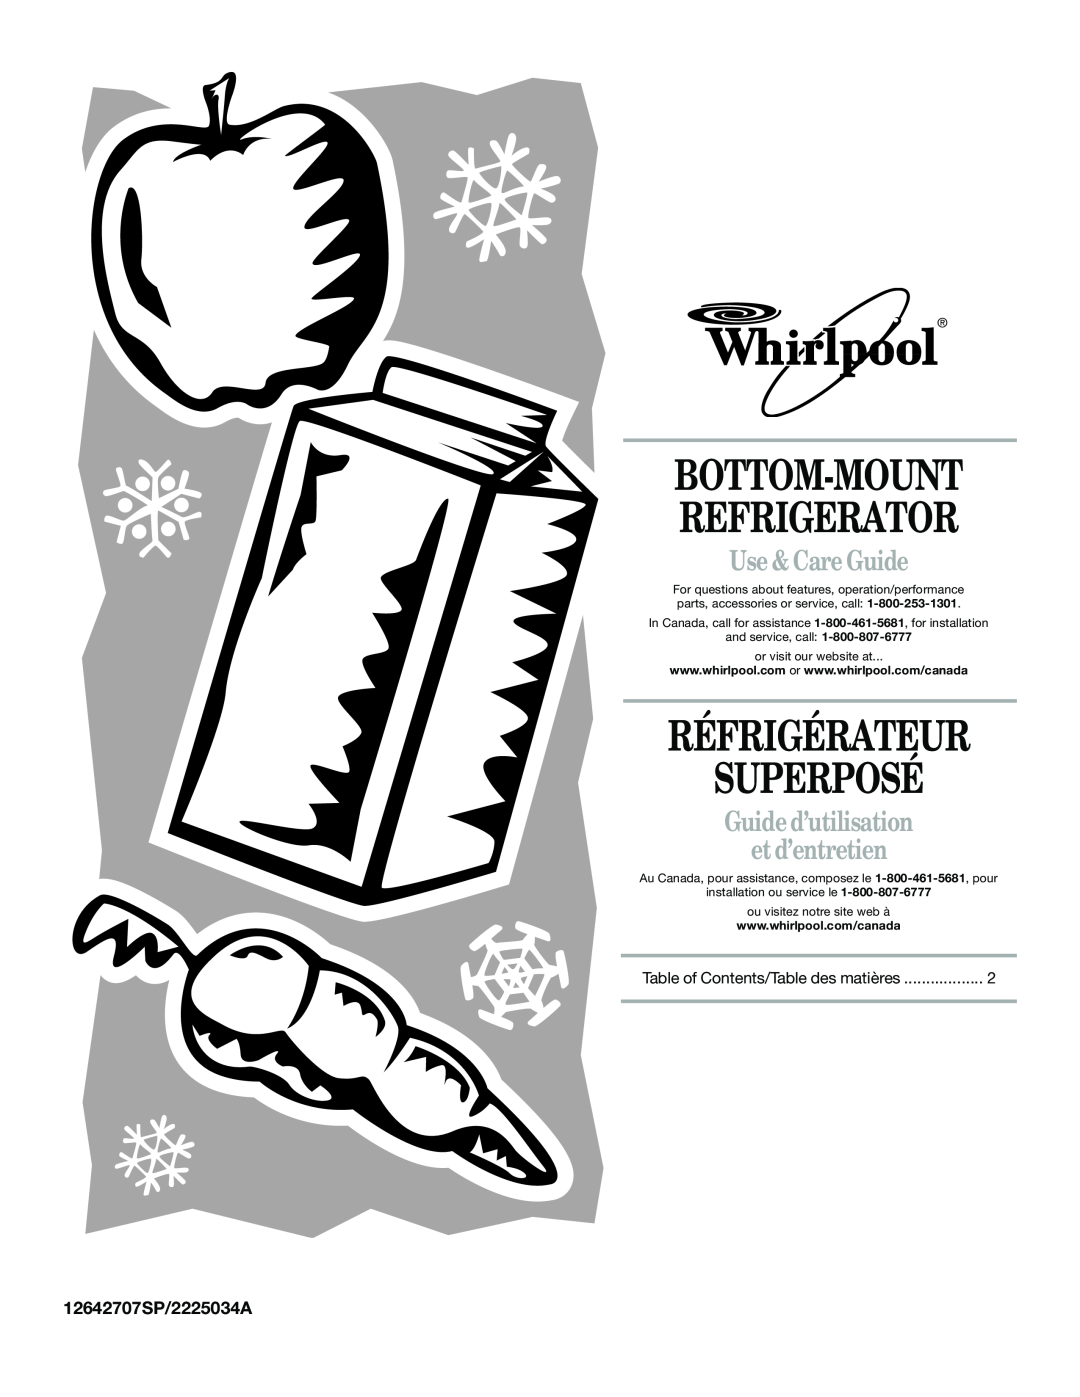 Whirlpool GB2SHKLLS00 manual Bottom-Mount Refrigerator, Réfrigérateur Superposé, Use & Care Guide, 12642707SP/2225034A 